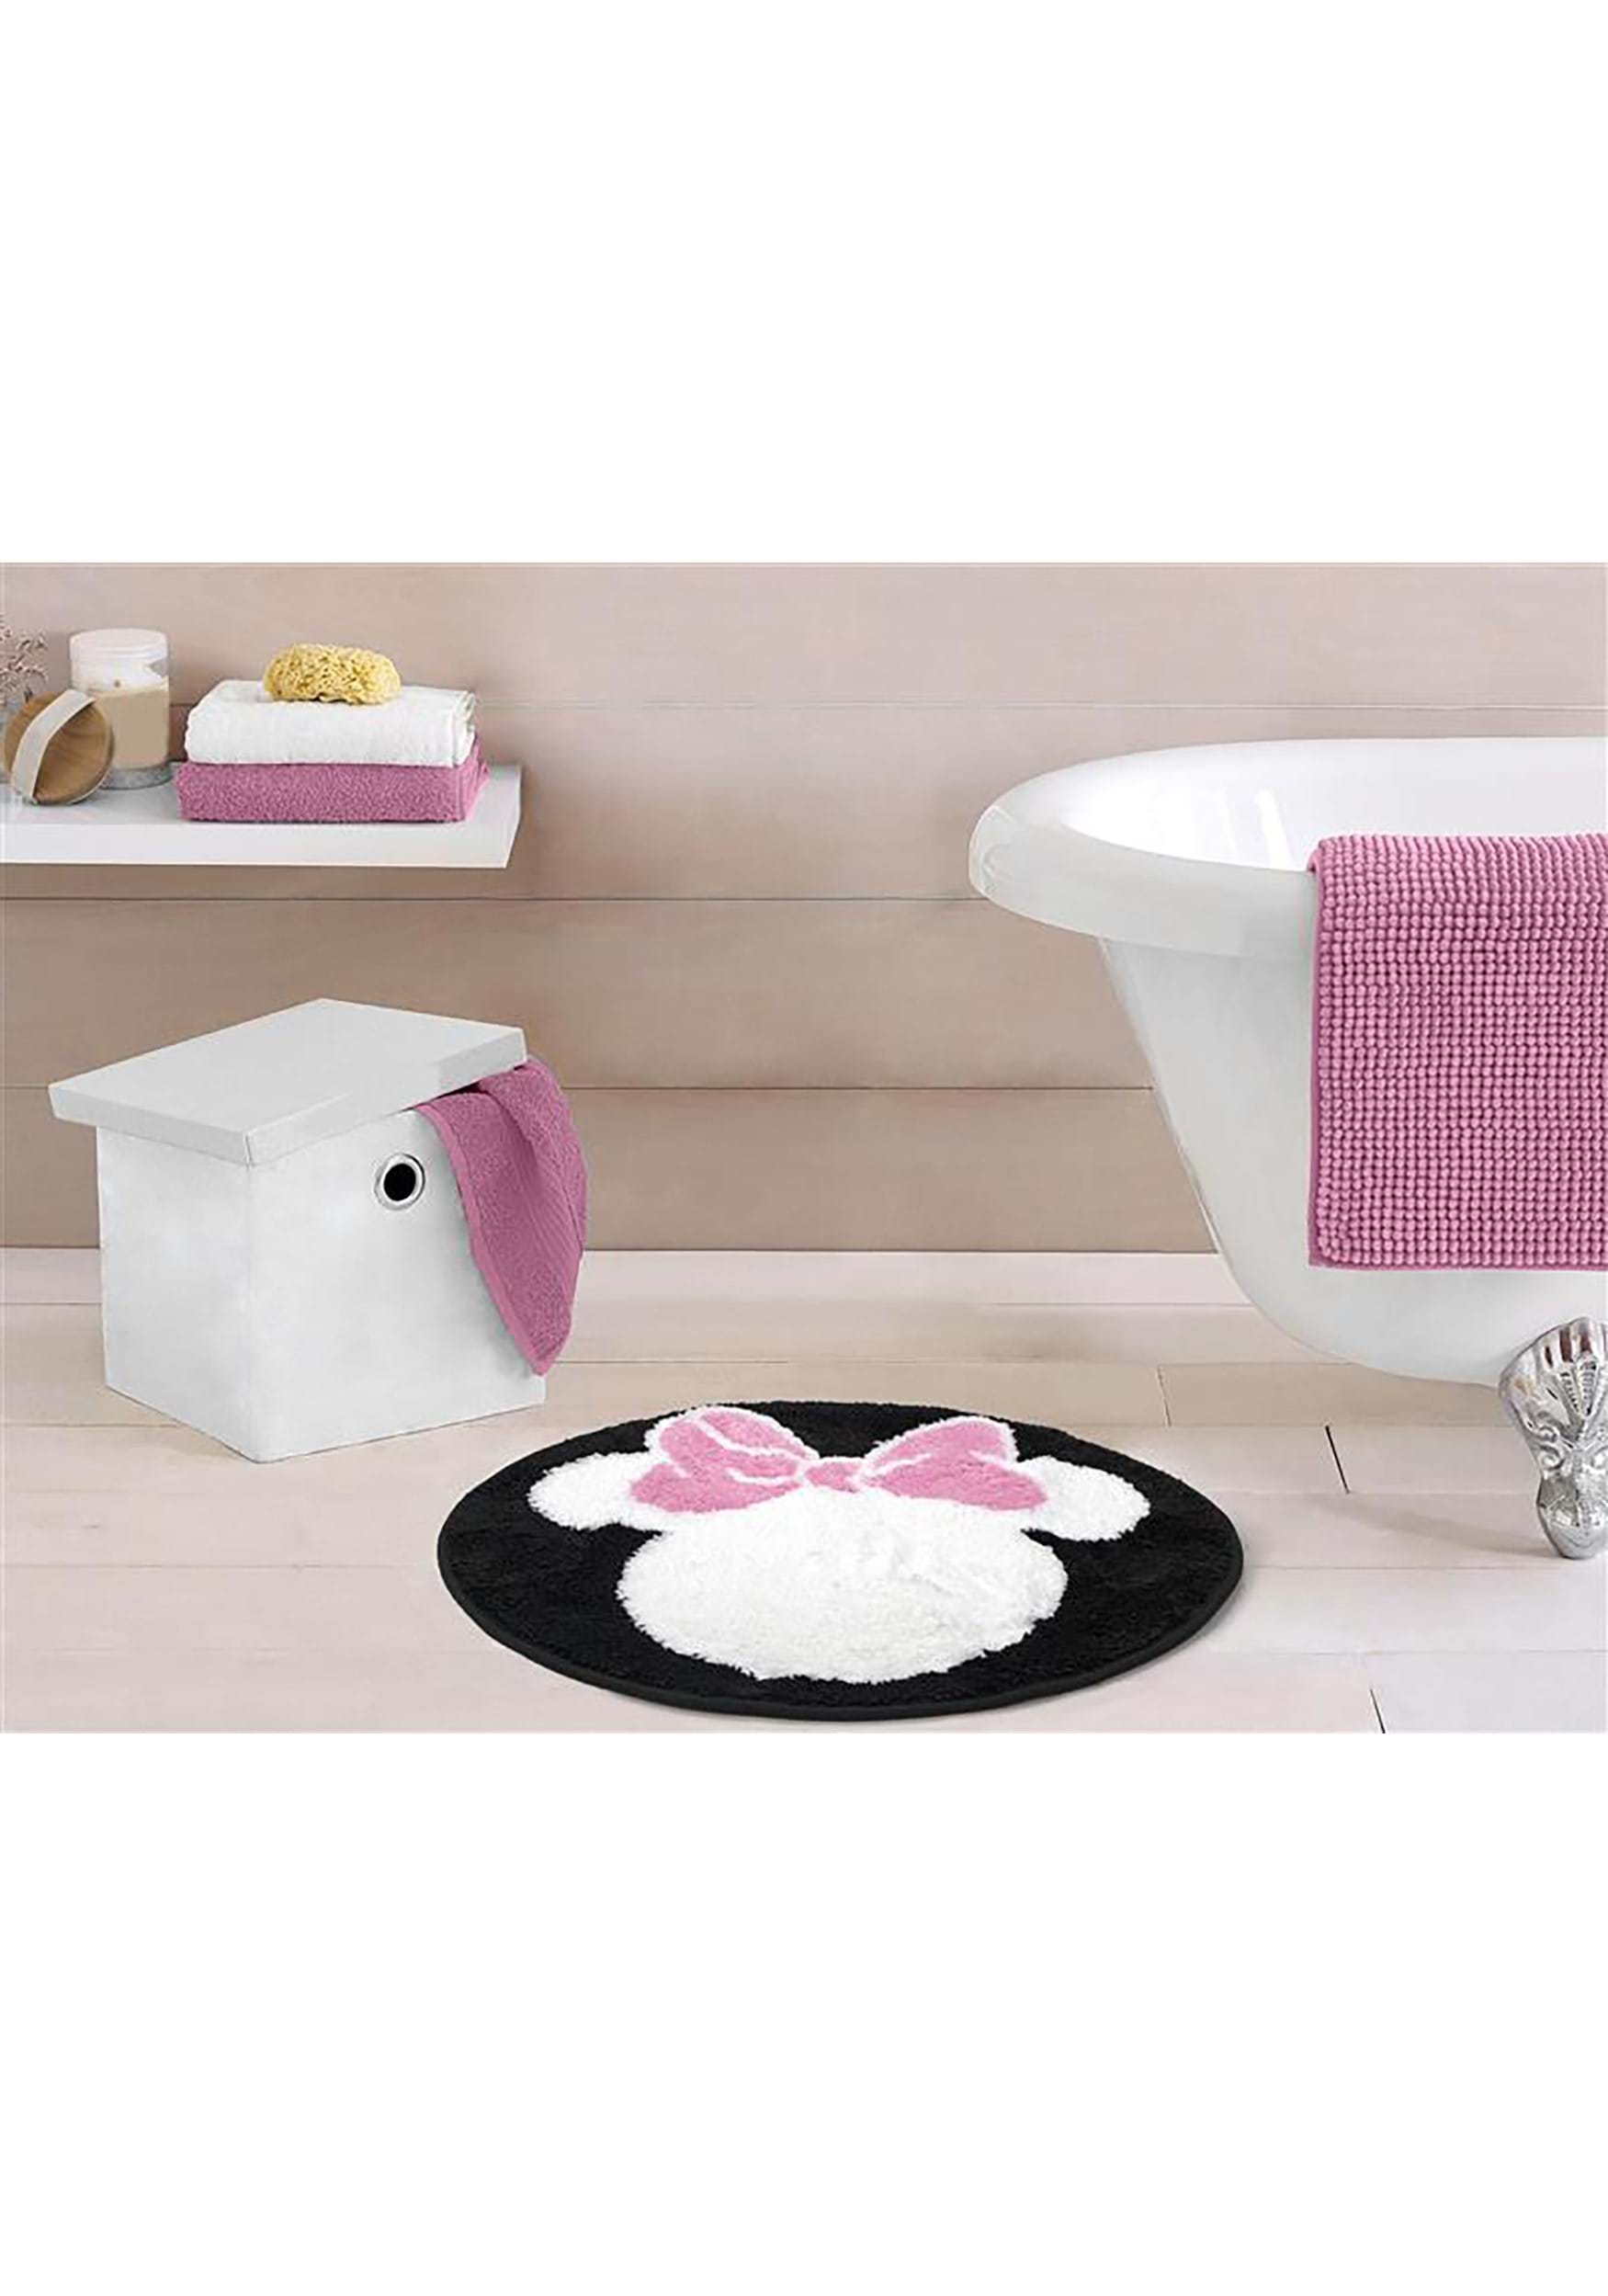 Disney Minnie Mouse Cotton Cherry Tufted Bath Rug